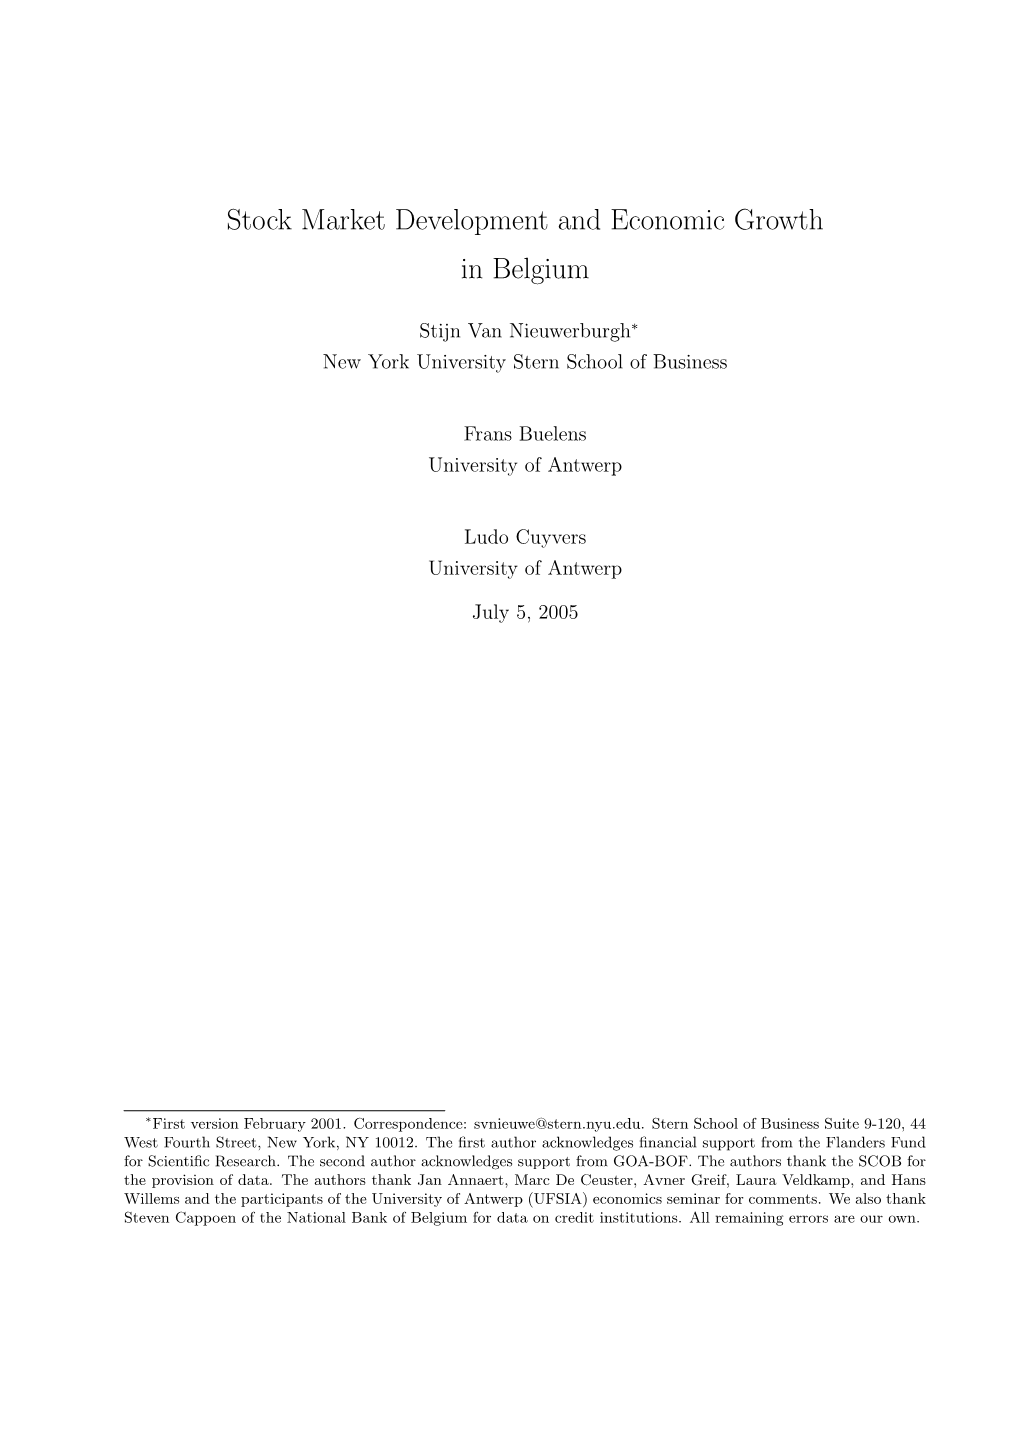 Stock Market Development and Economic Growth in Belgium